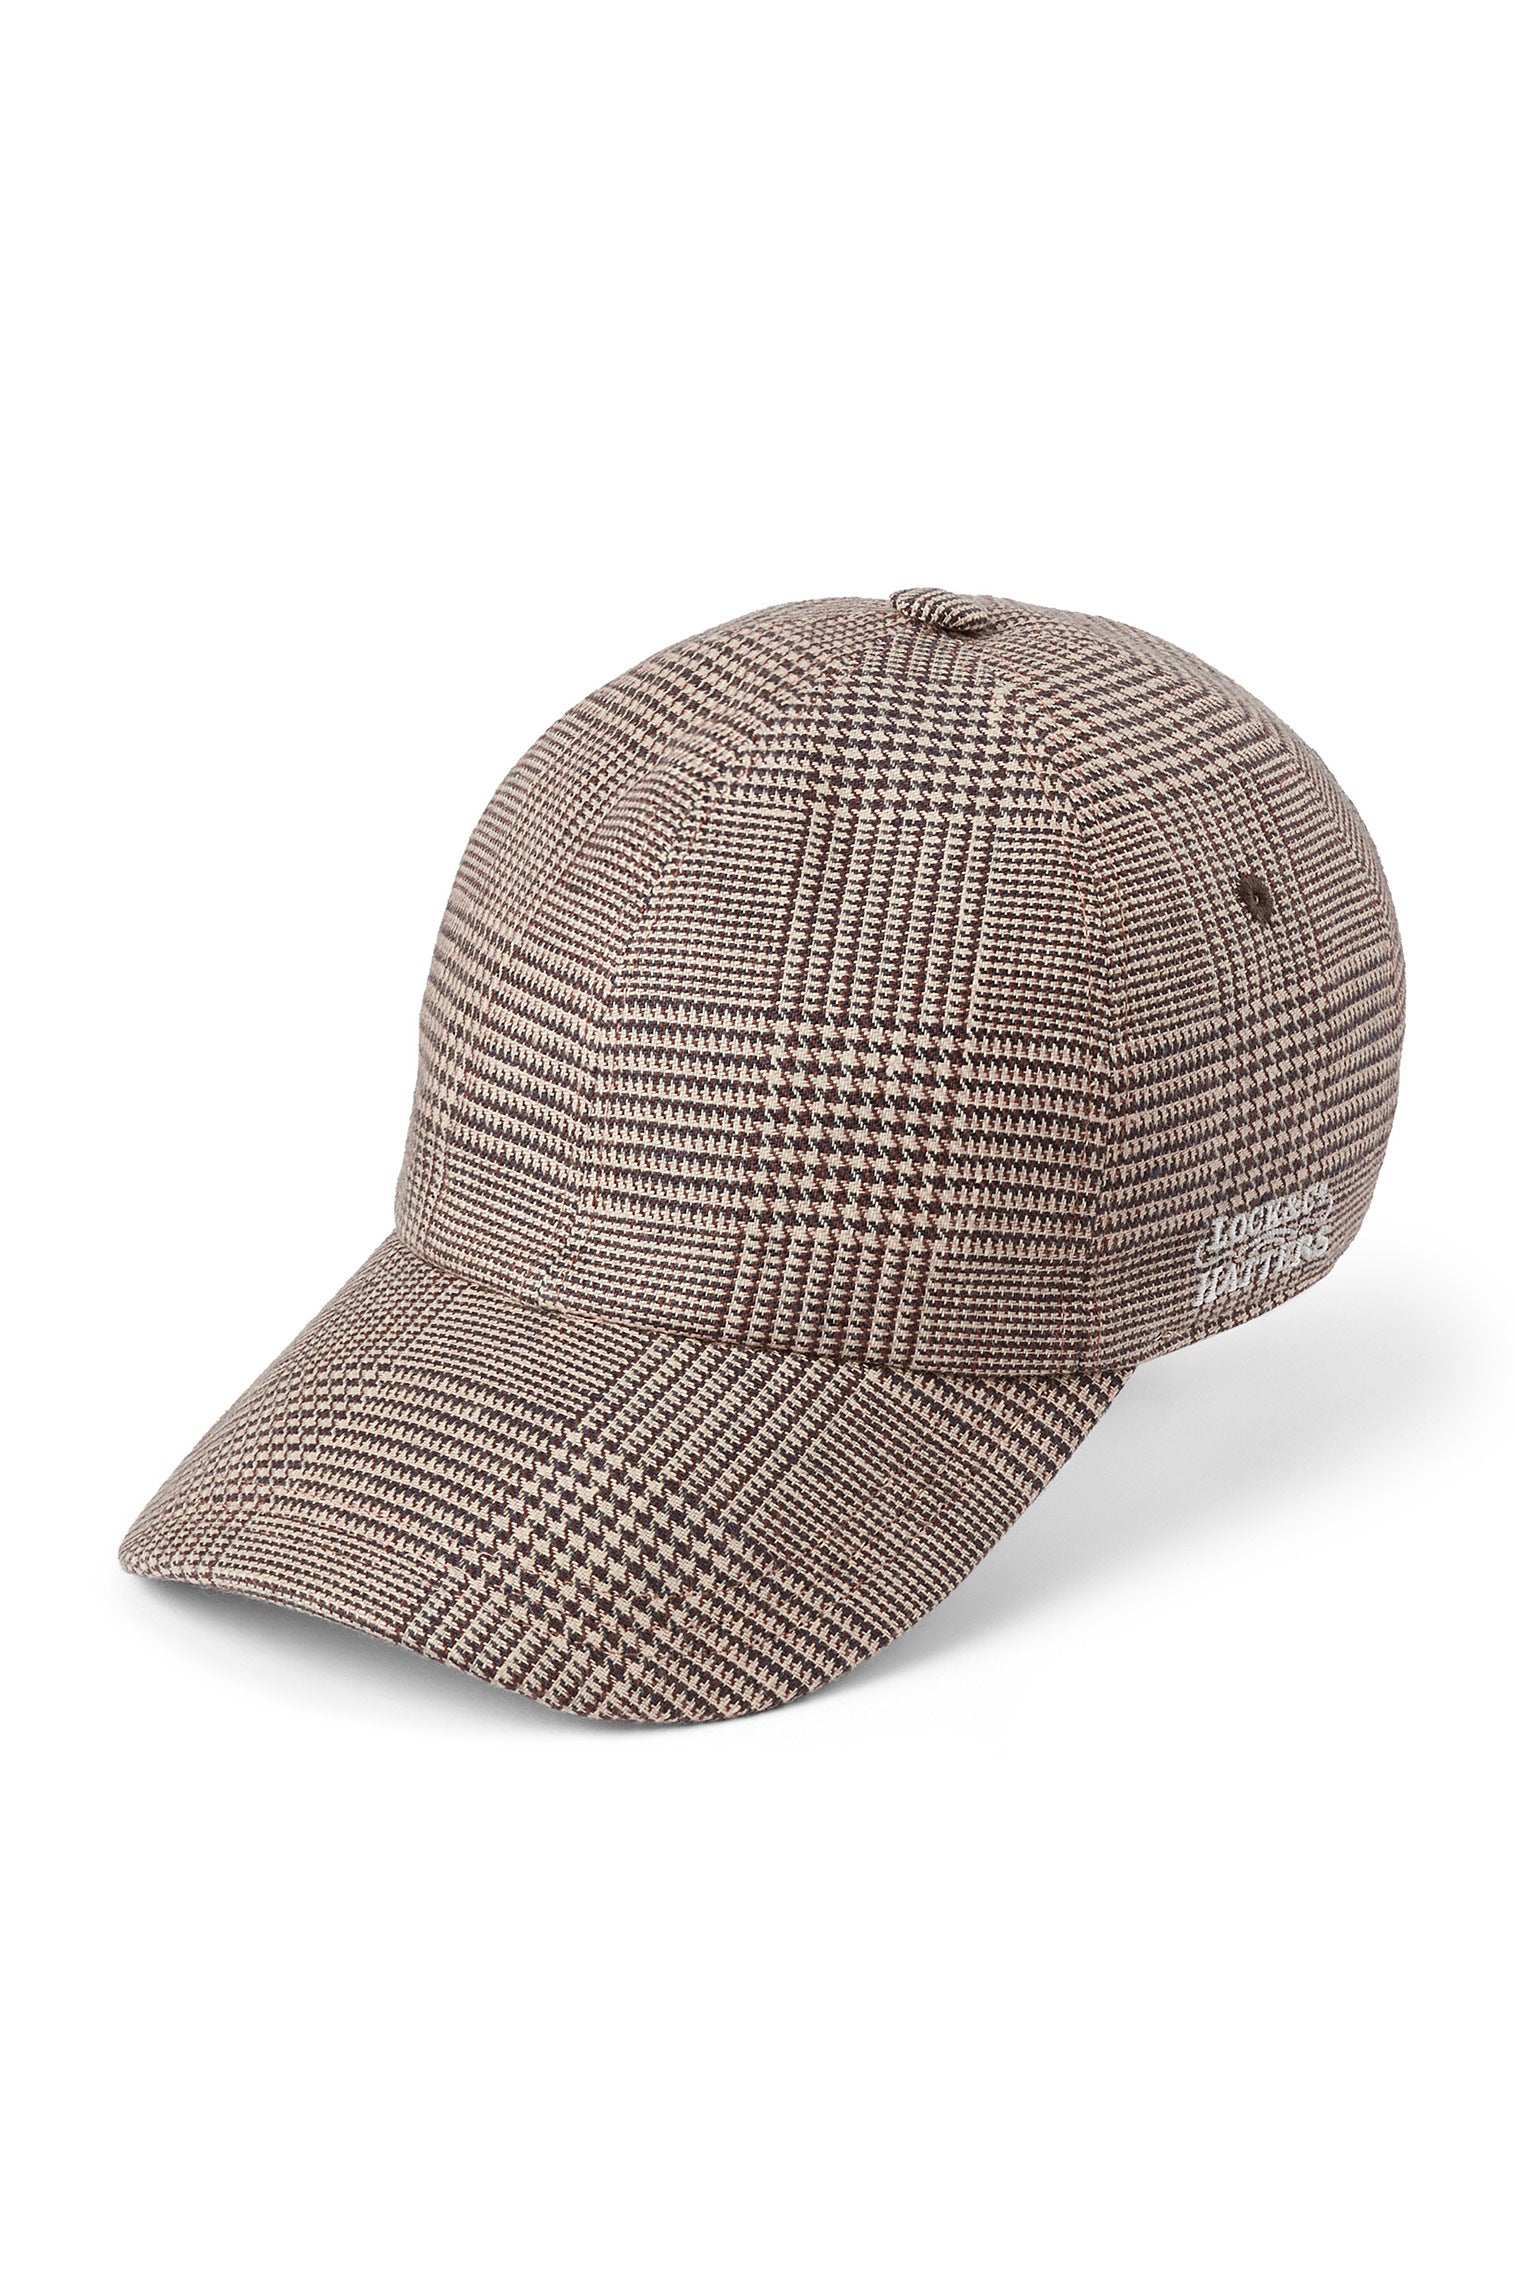 Adjustable Check Baseball Cap - New Season Hat Collection - Lock & Co. Hatters London UK